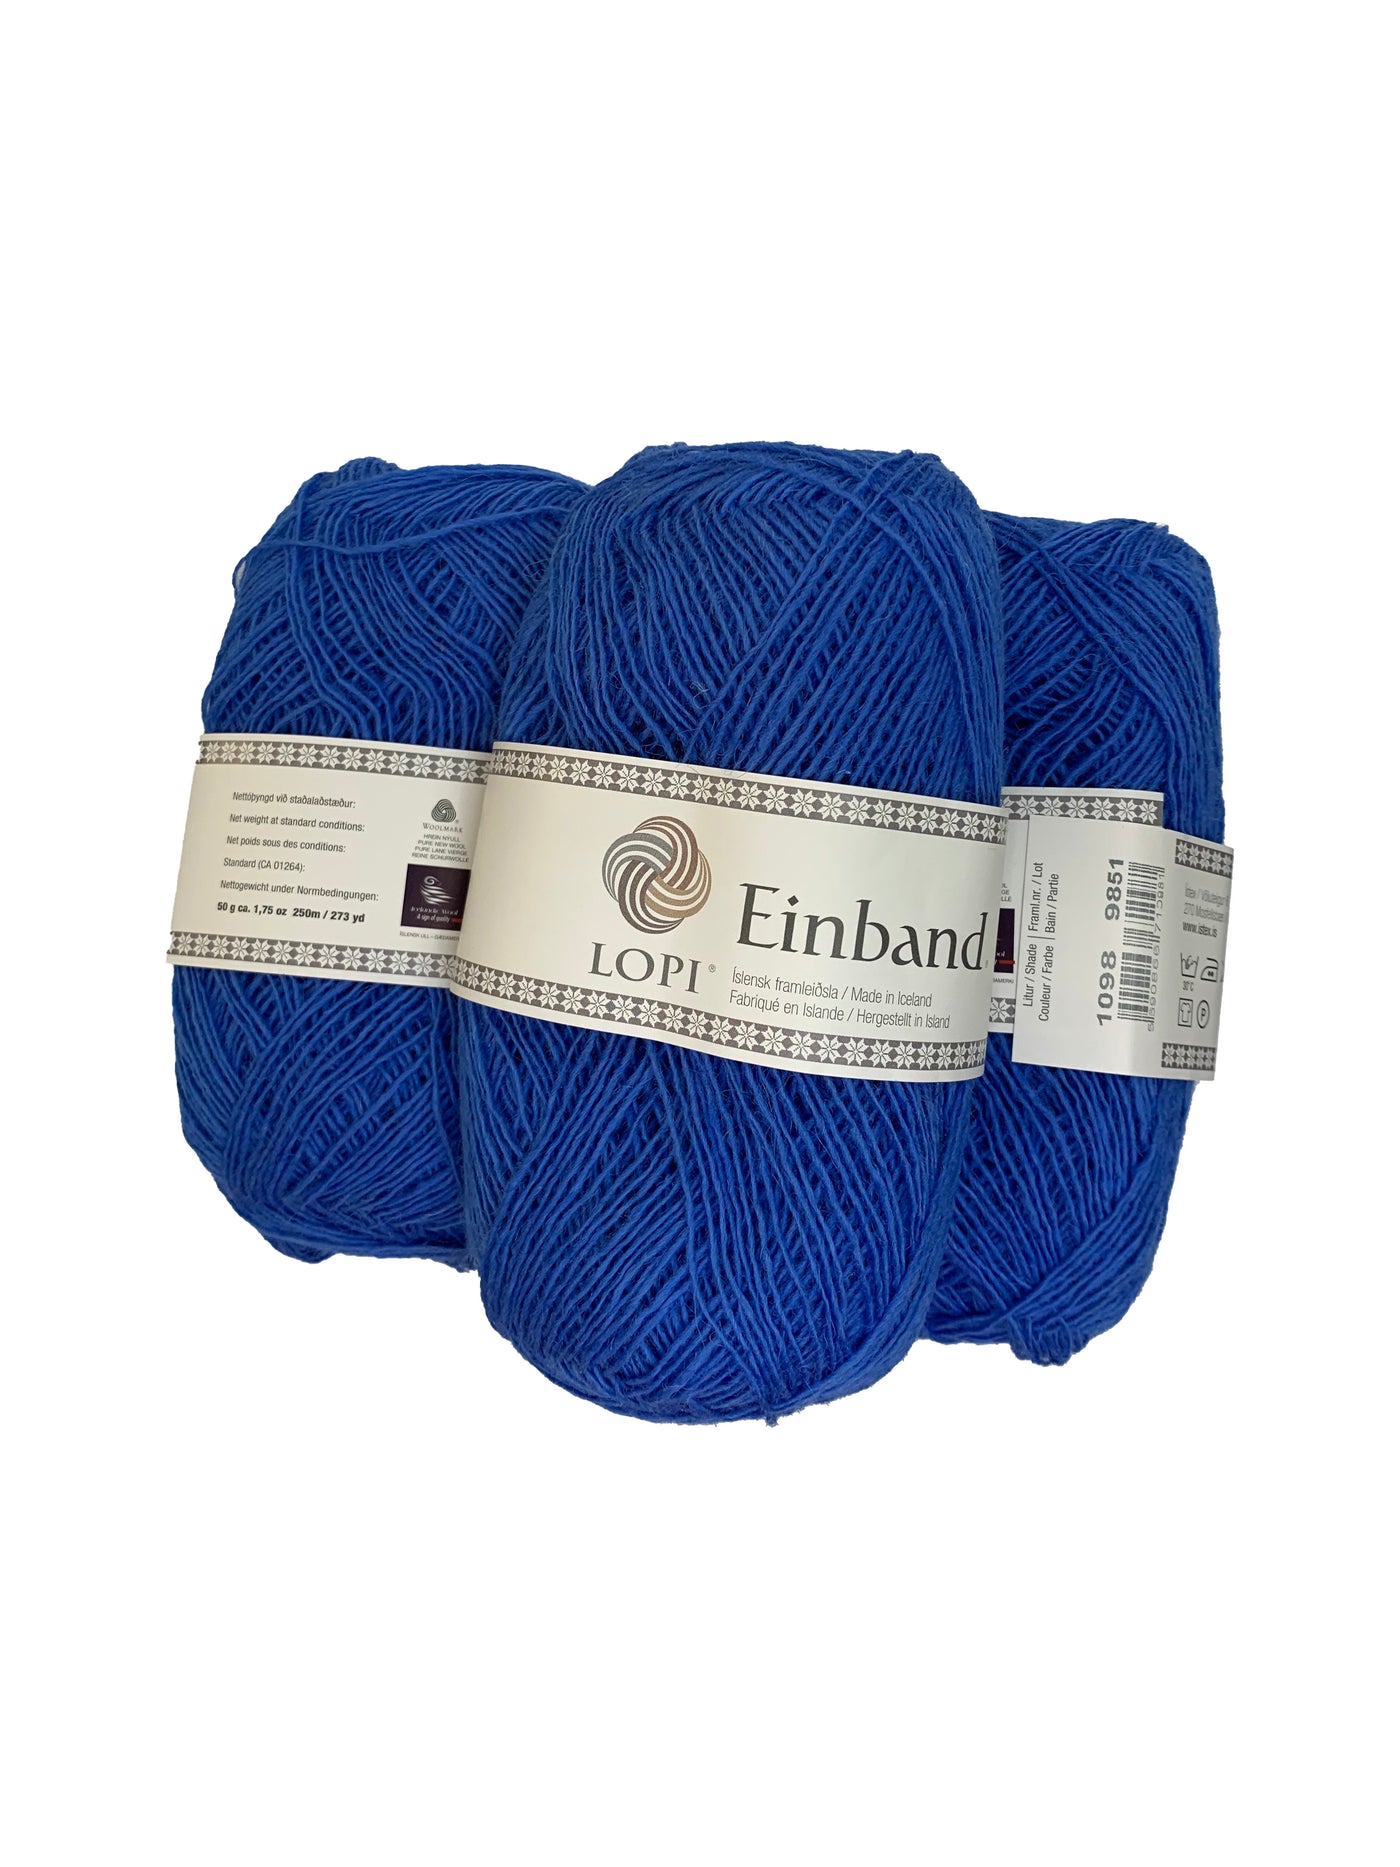 Istex Lopi Einband Icelandic Wool Lace Knitting Yarn